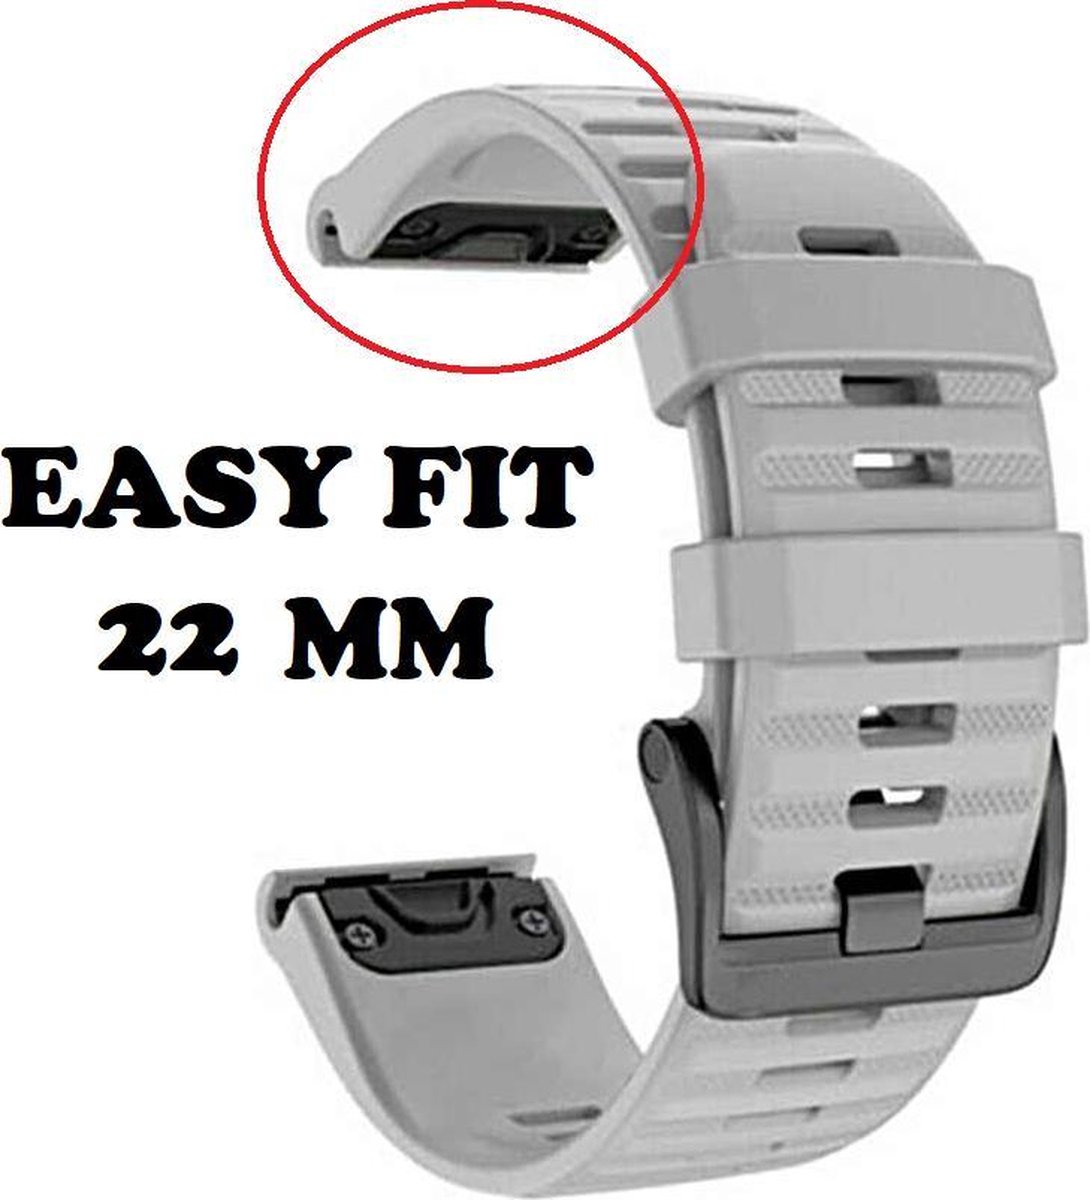 Firsttee - Siliconen Horlogeband - EASY FIT - Voor GARMIN - GRIJS - 22 MM - Horlogebandjes - Sporthorloge - Easy Click - Garmin - S60 - S62 - Fenix 5 - Forerunner 935 - Fenix 6 (Pro) - Horloge bandje - Golfkleding - Golf accessoires - Cadeau